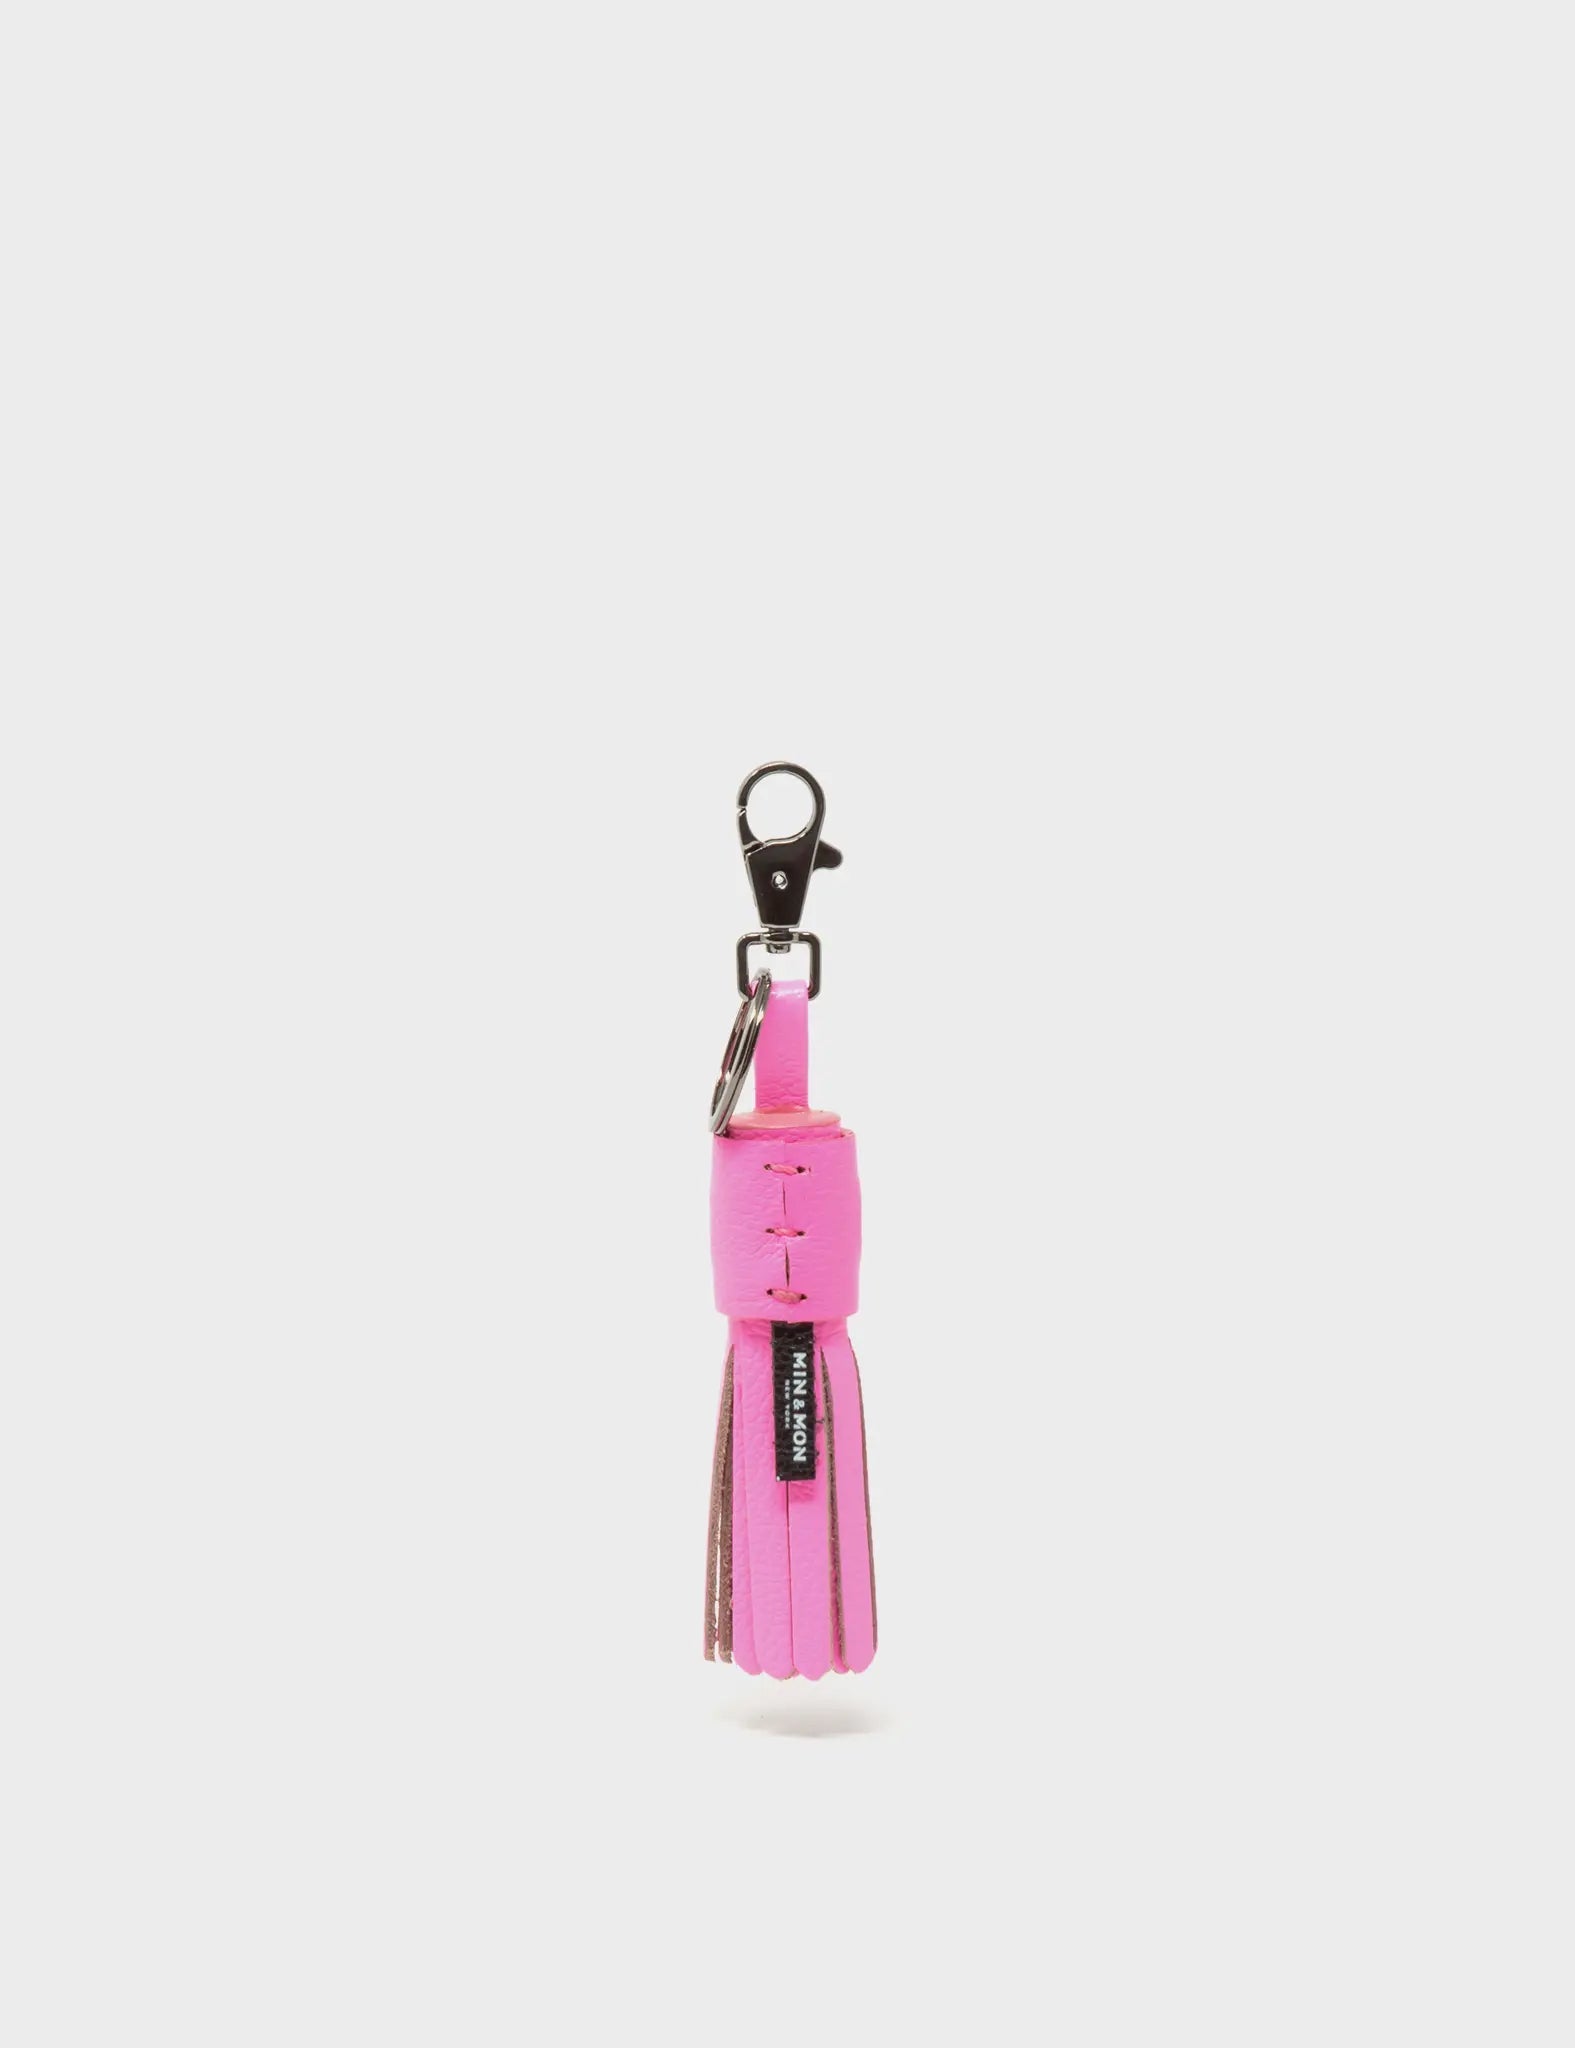 Squid Charm - Bubblegum Pink Leather Keychain - Back view